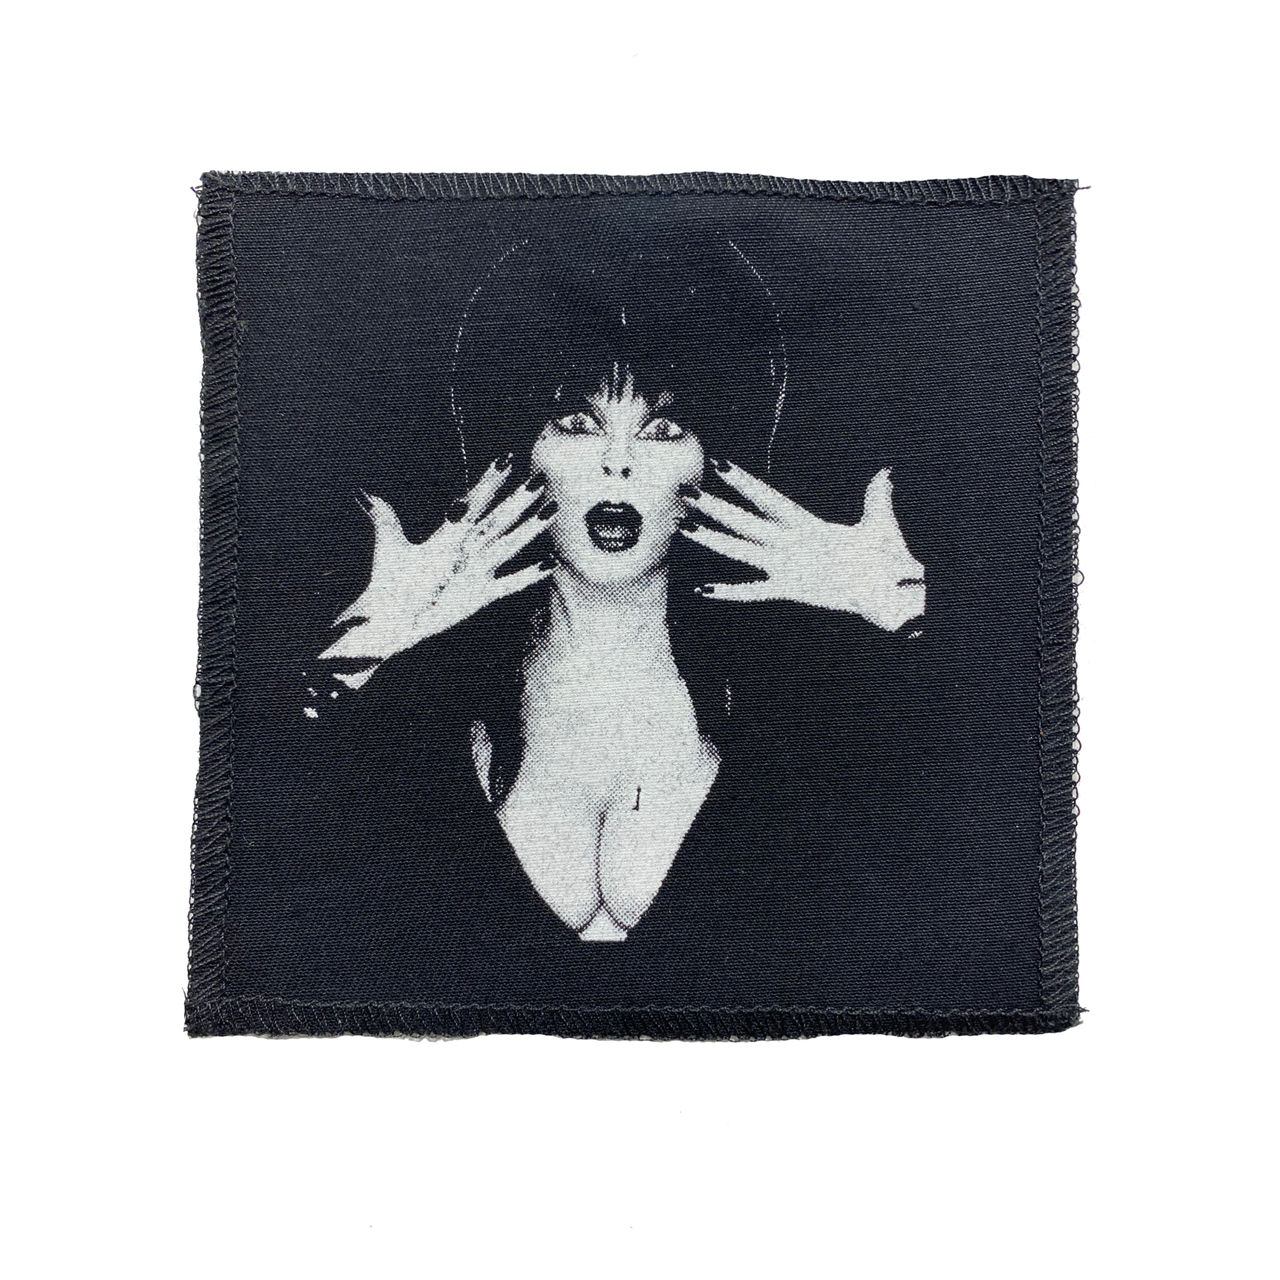 Elvira Black Cloth Patch